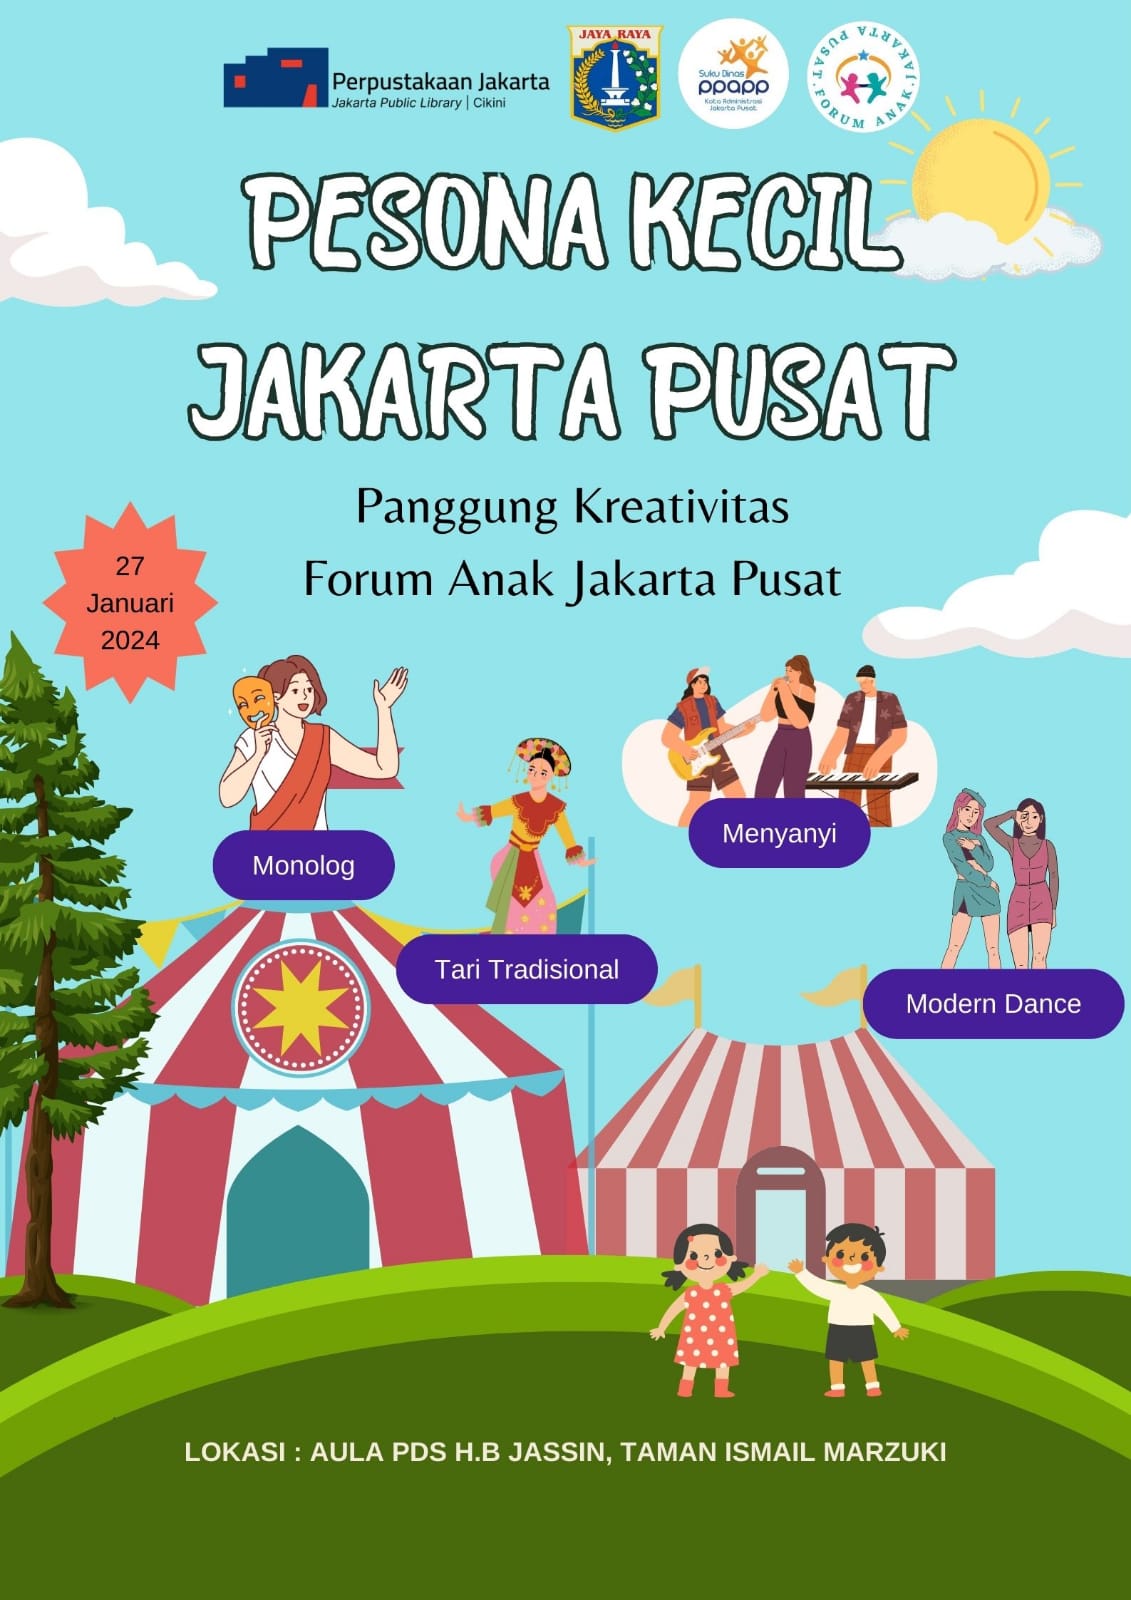 Pesona Kecil Jakarta Pusat "Panggung Kreativitas Forum Anak Jakarta Pusat"